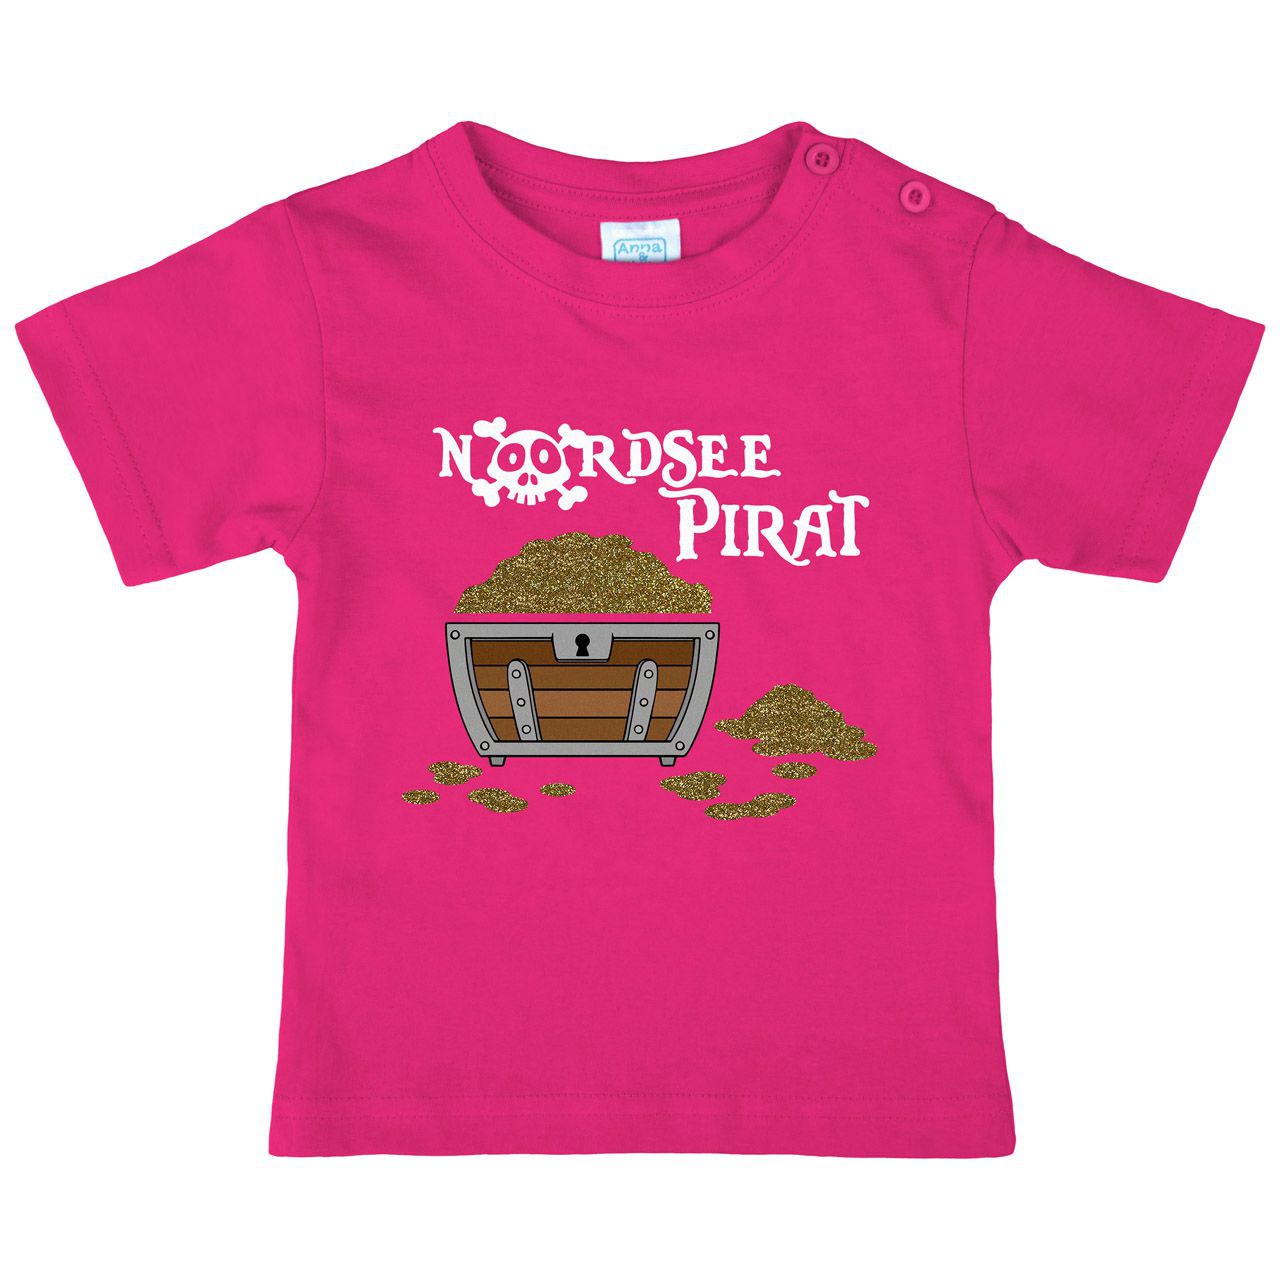 Nordsee Pirat Truhe Gold Glitzer Kinder T-Shirt pink 110 / 116